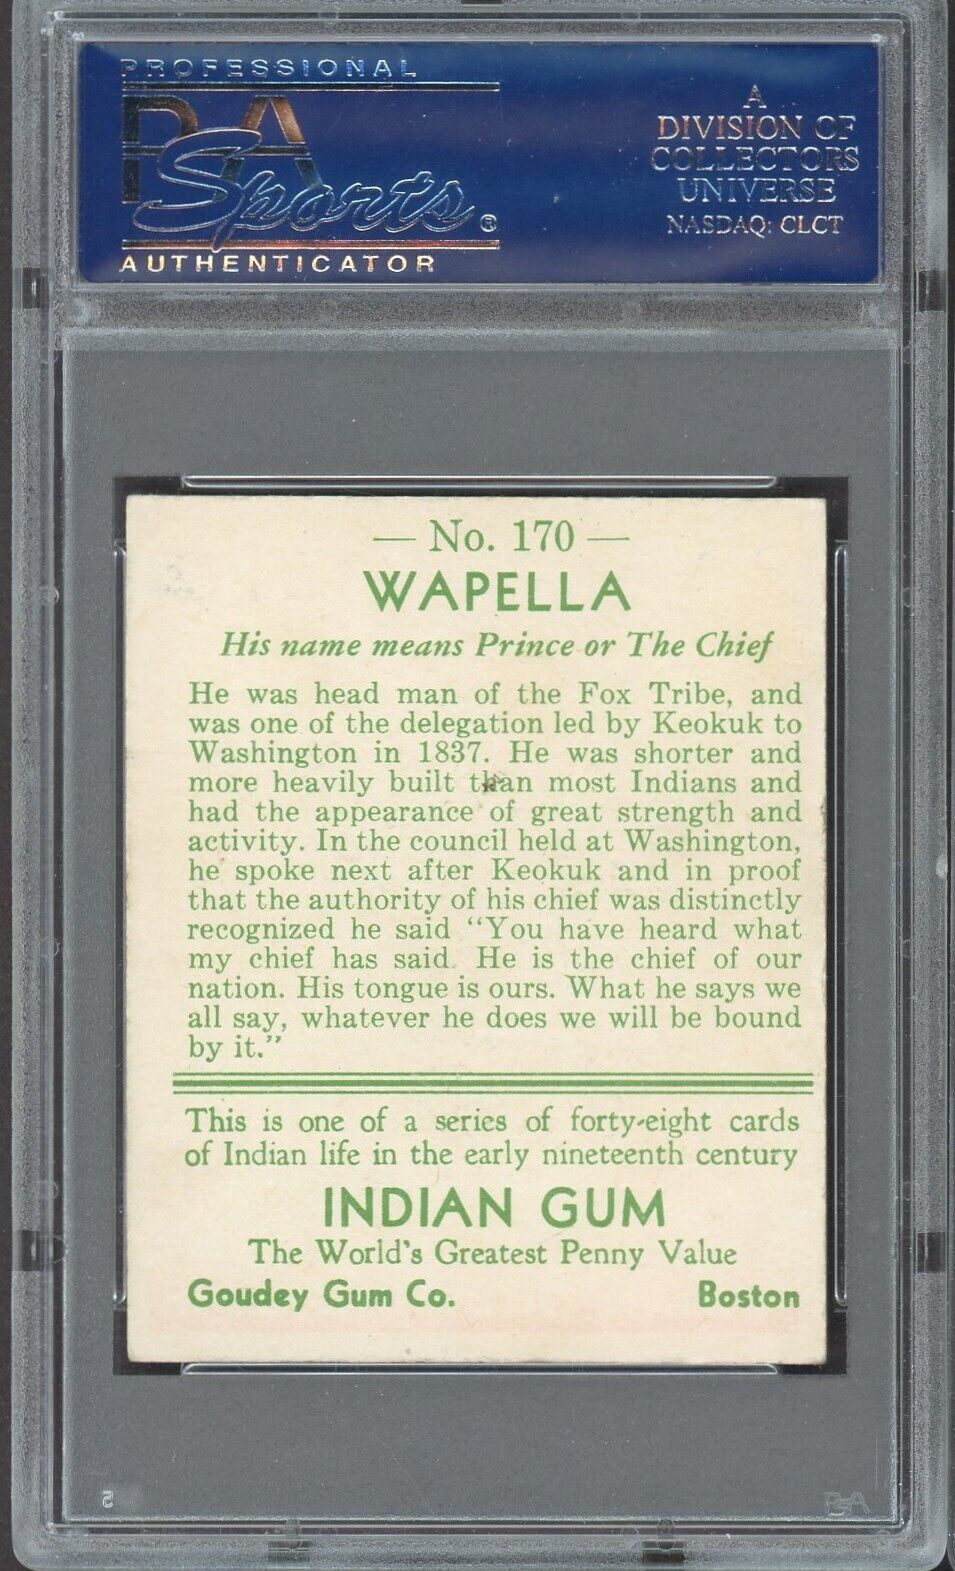 1933 Goudey Indian Gum (Series of 48) #170 Wapella (PSA 6.5 EX/MT+) Sharp!